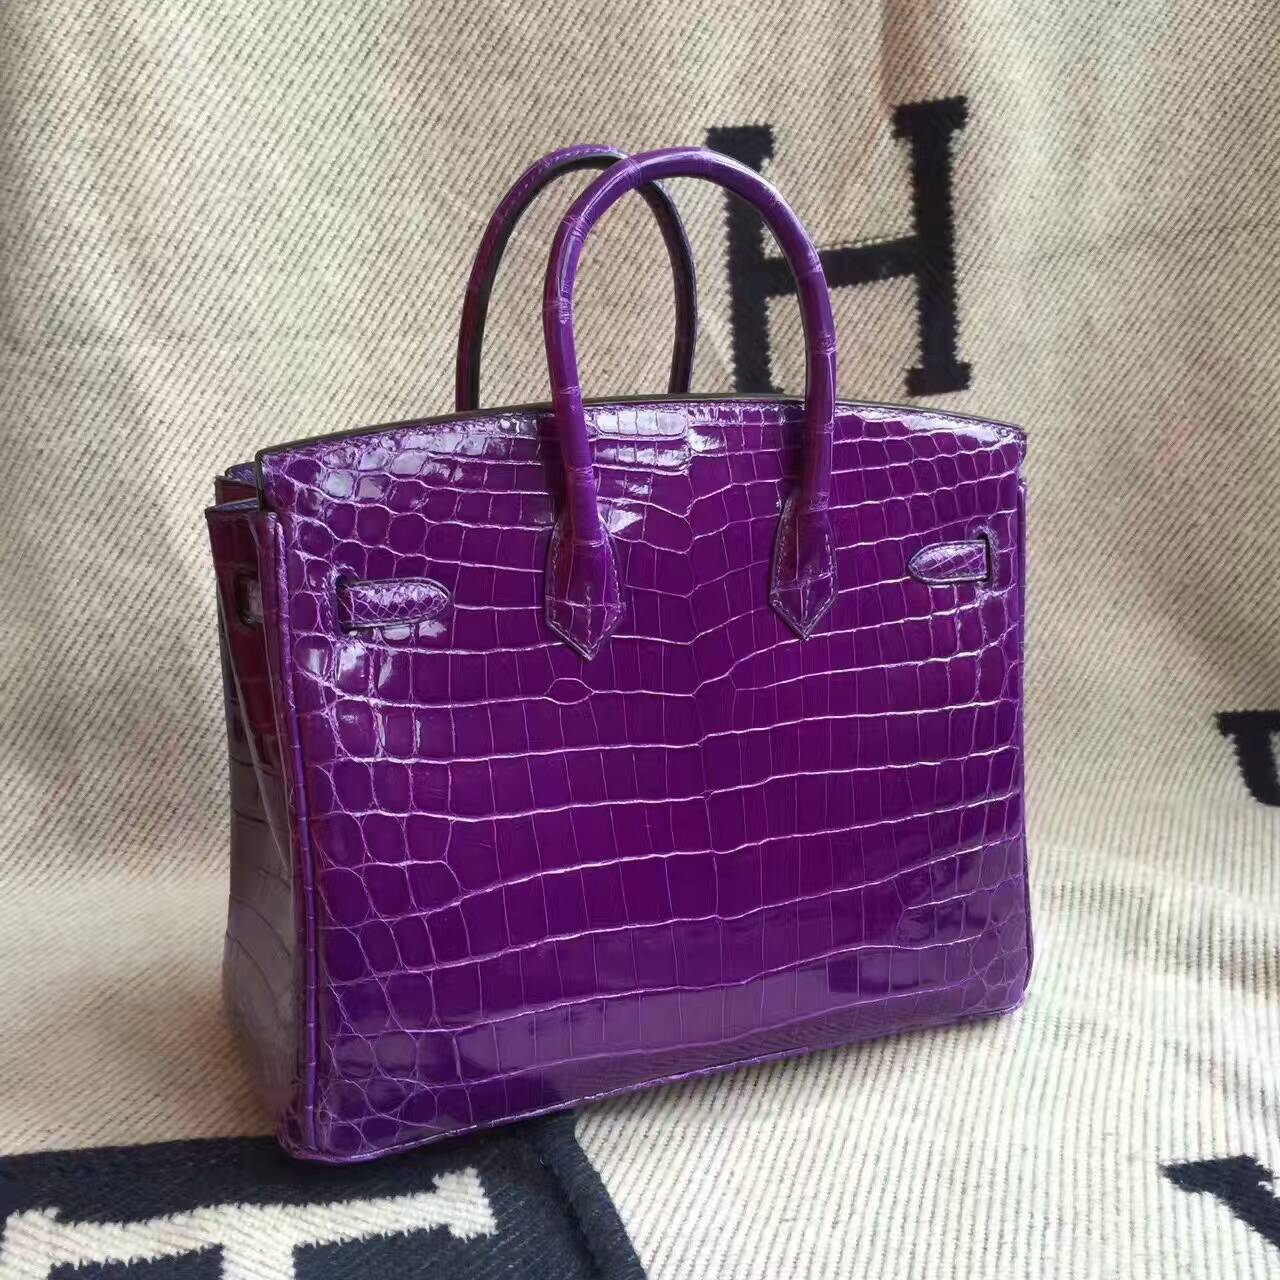 Discount Hermes Crocodile Shiny Leather Birkin Bag 25cm in 5L Ultraviolet